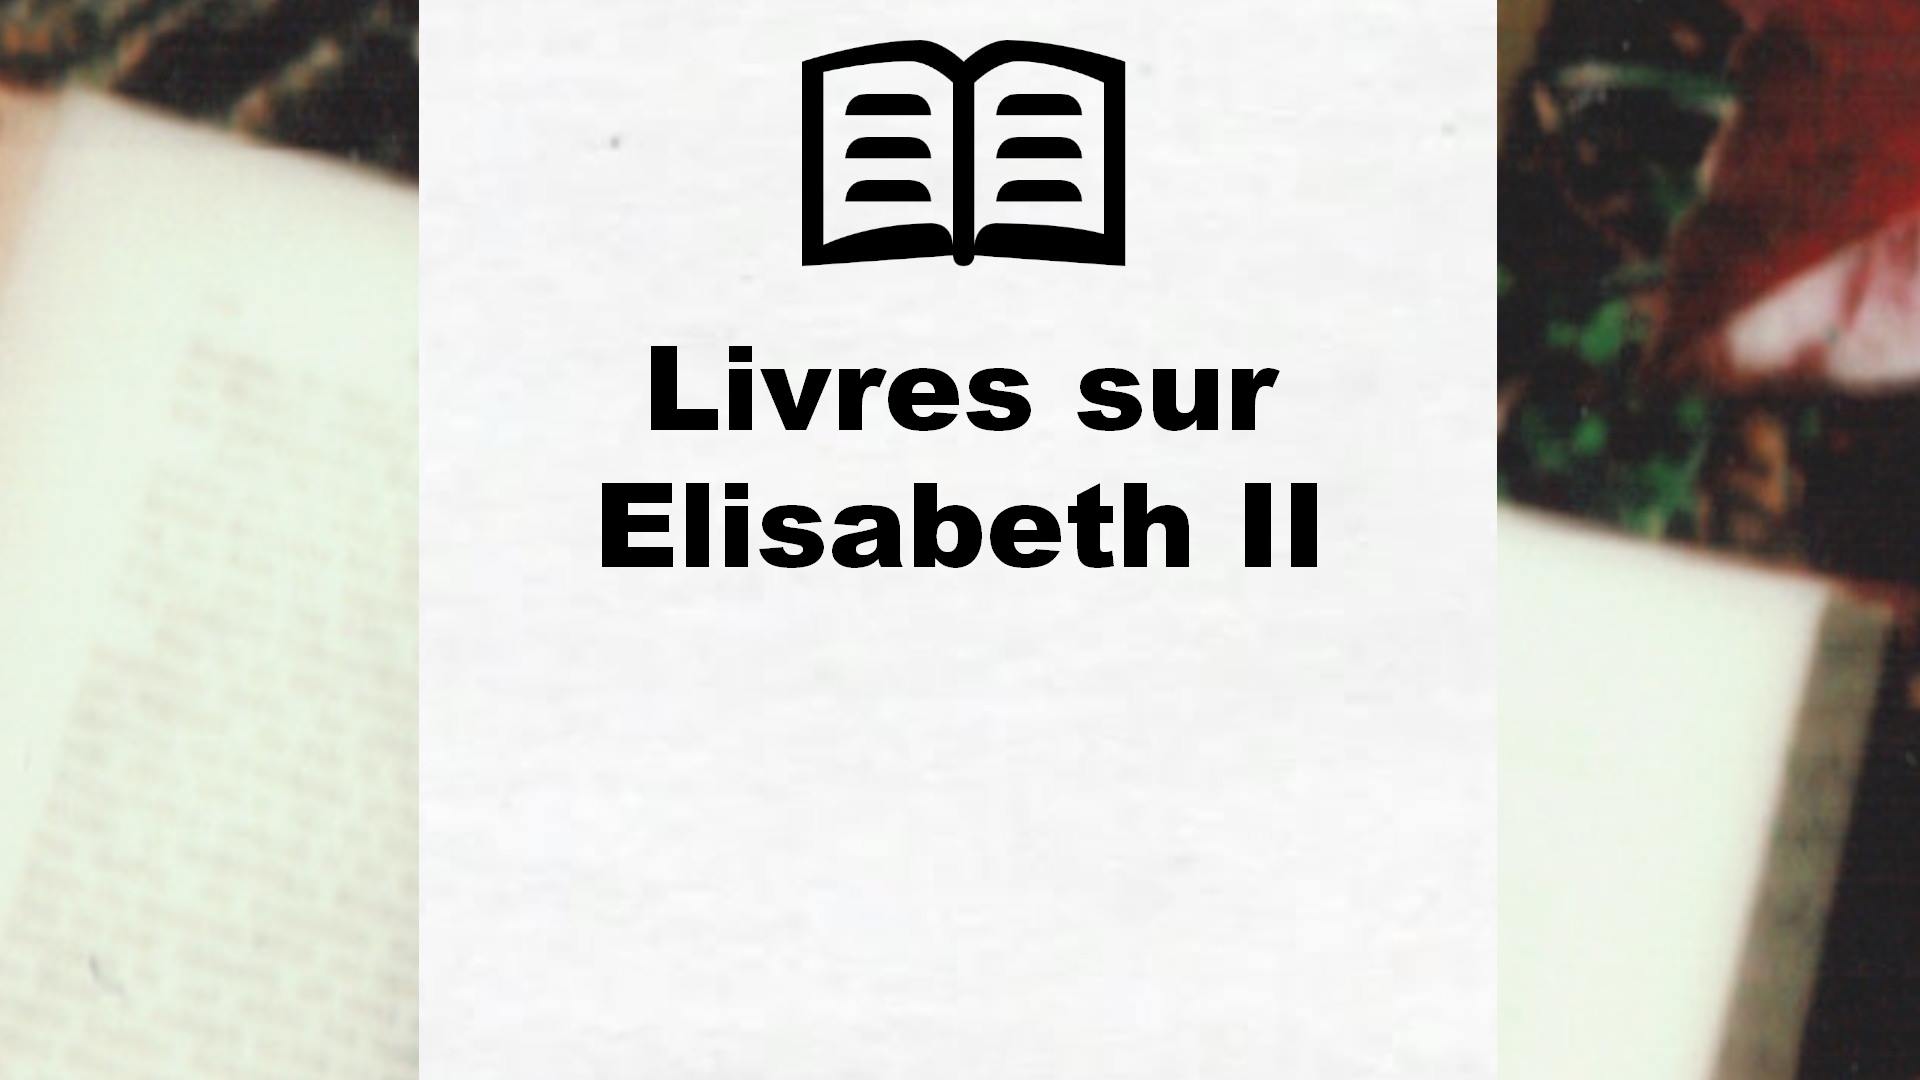 Livres sur Elisabeth II